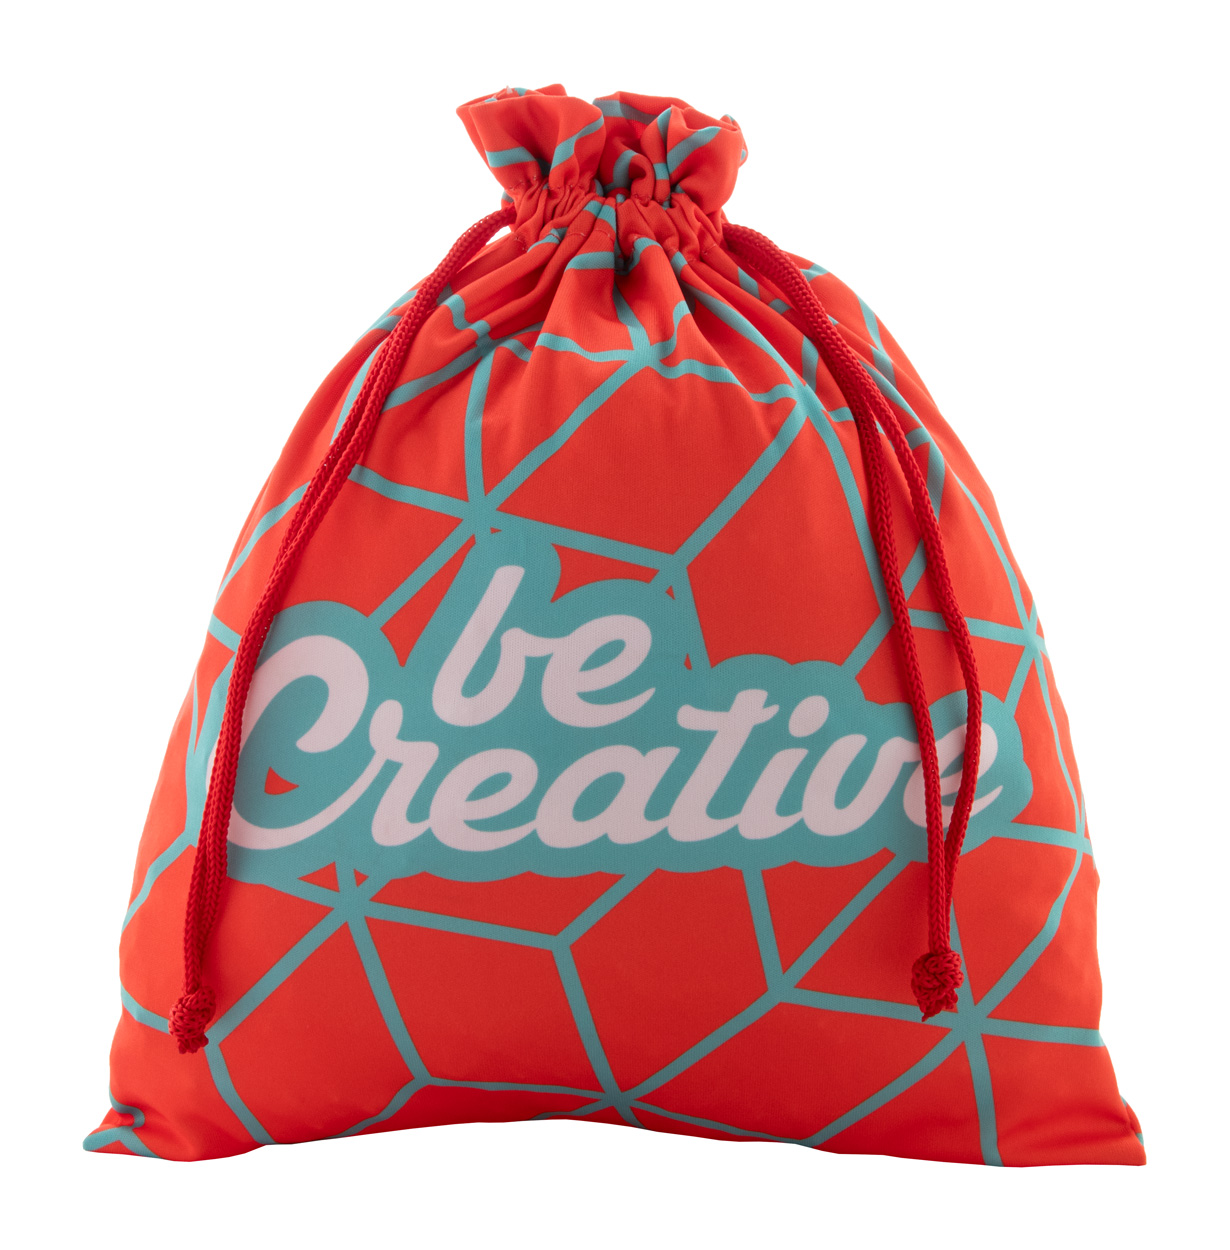 SuboGift L custom gift bag, large - red